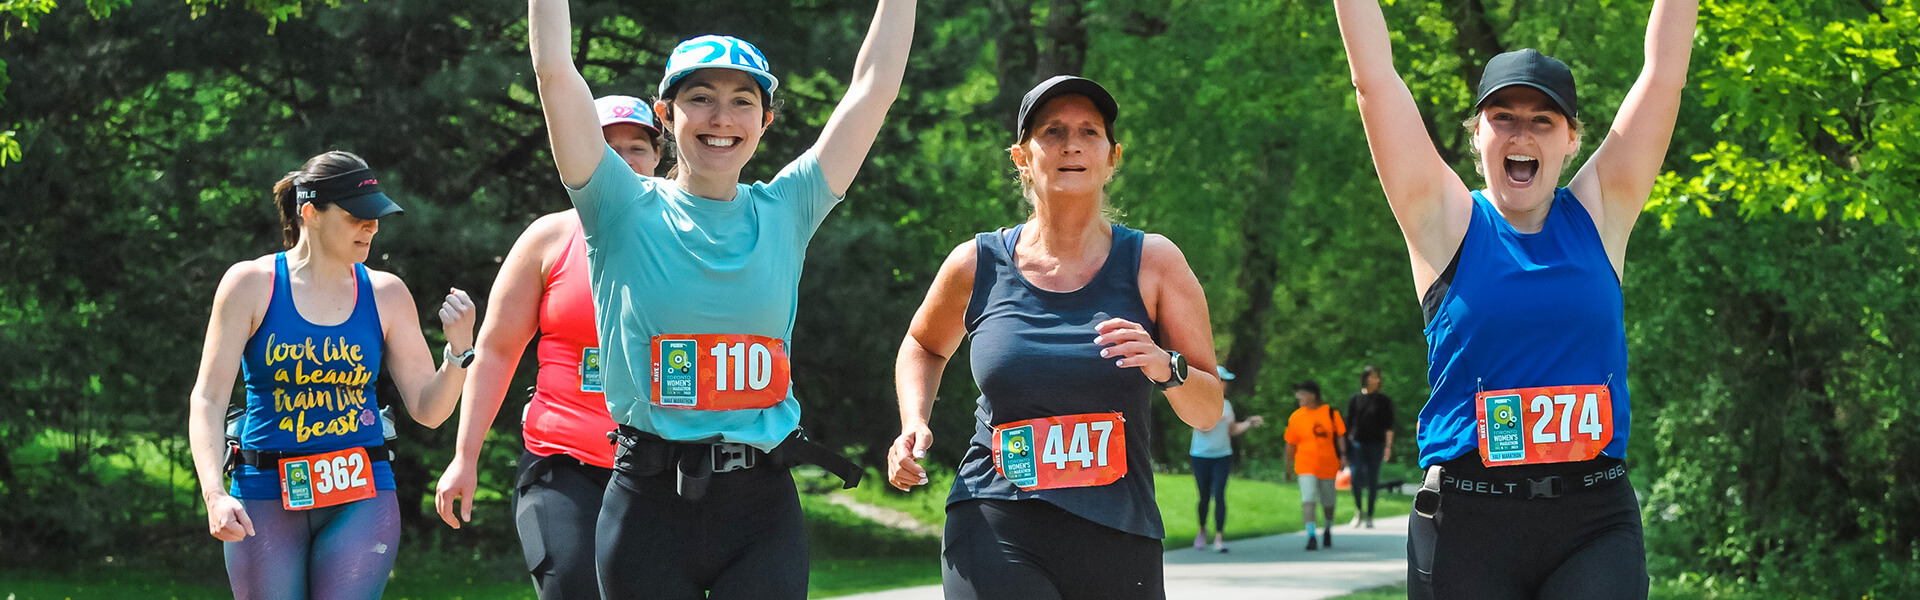 Half Marathon/10K/5K Race Information - Toronto Women's Run Series